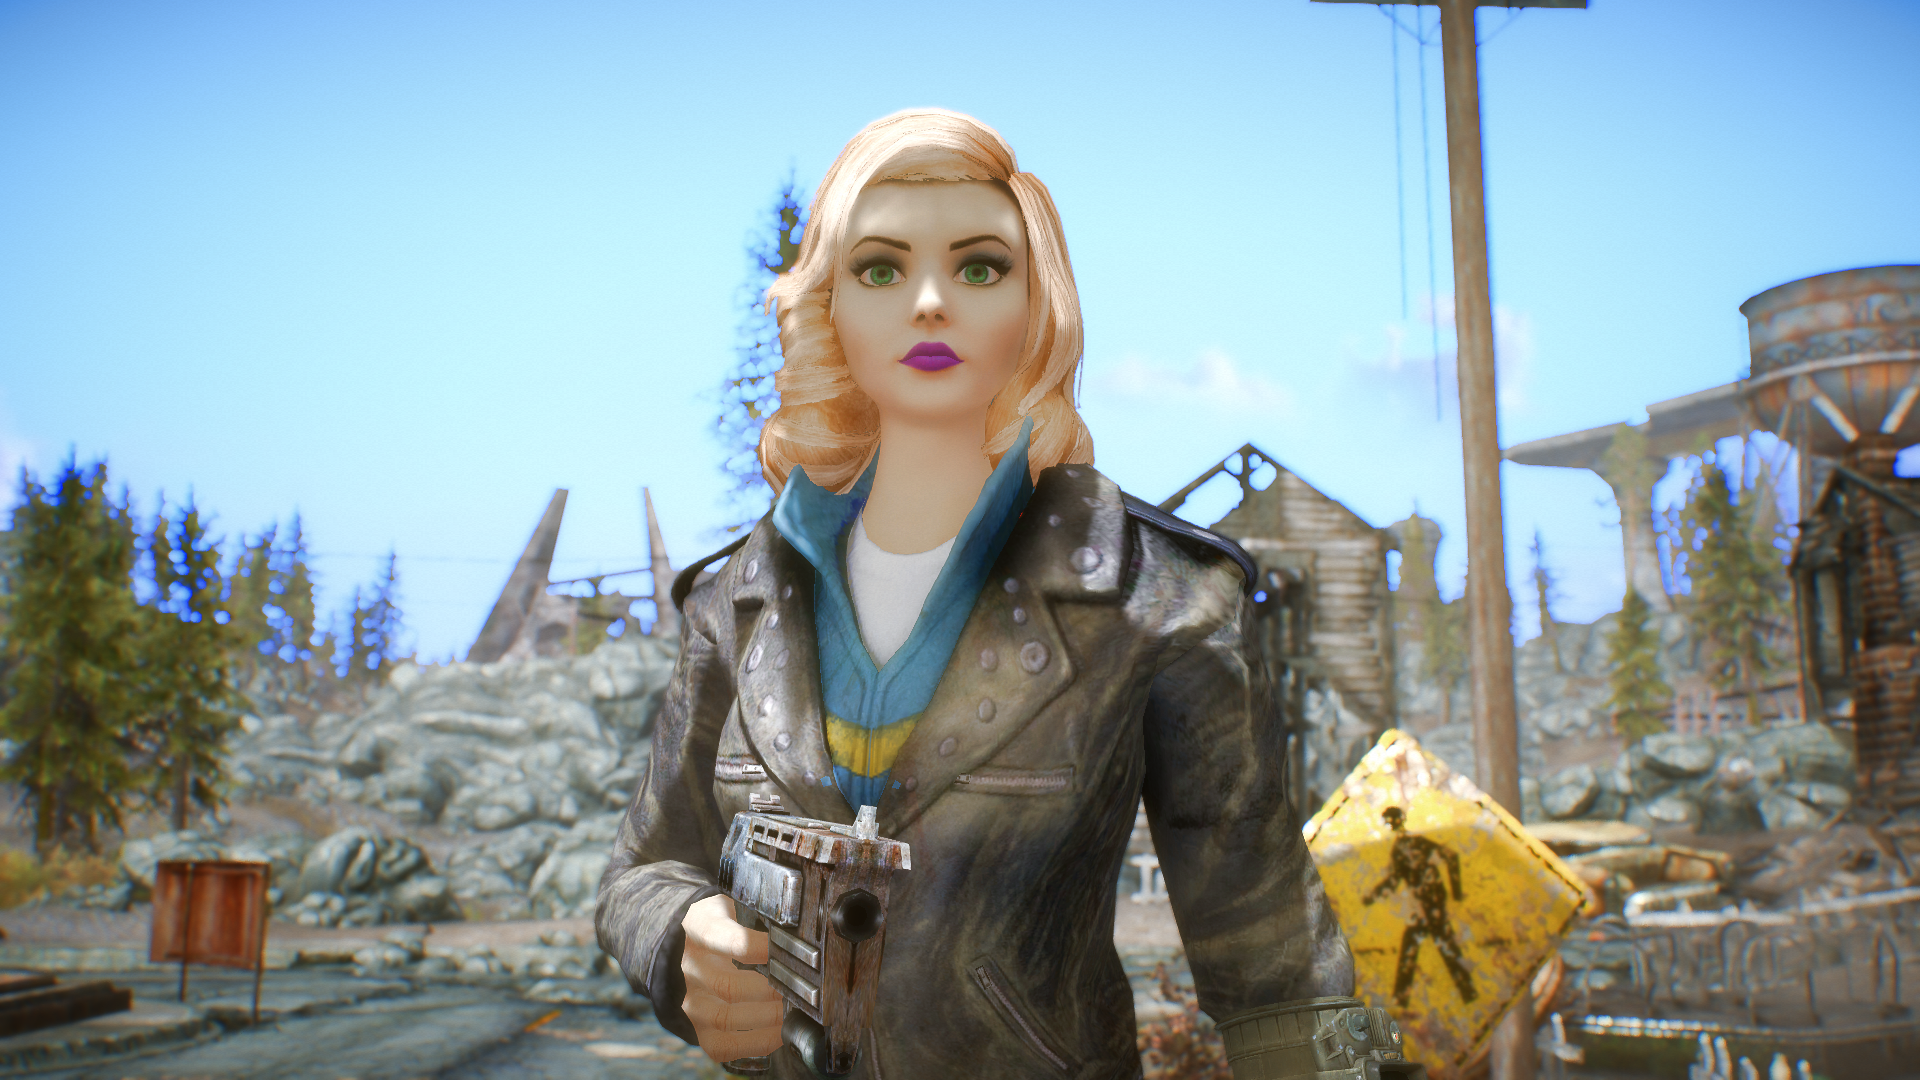 Fallout 4 Elizabeth